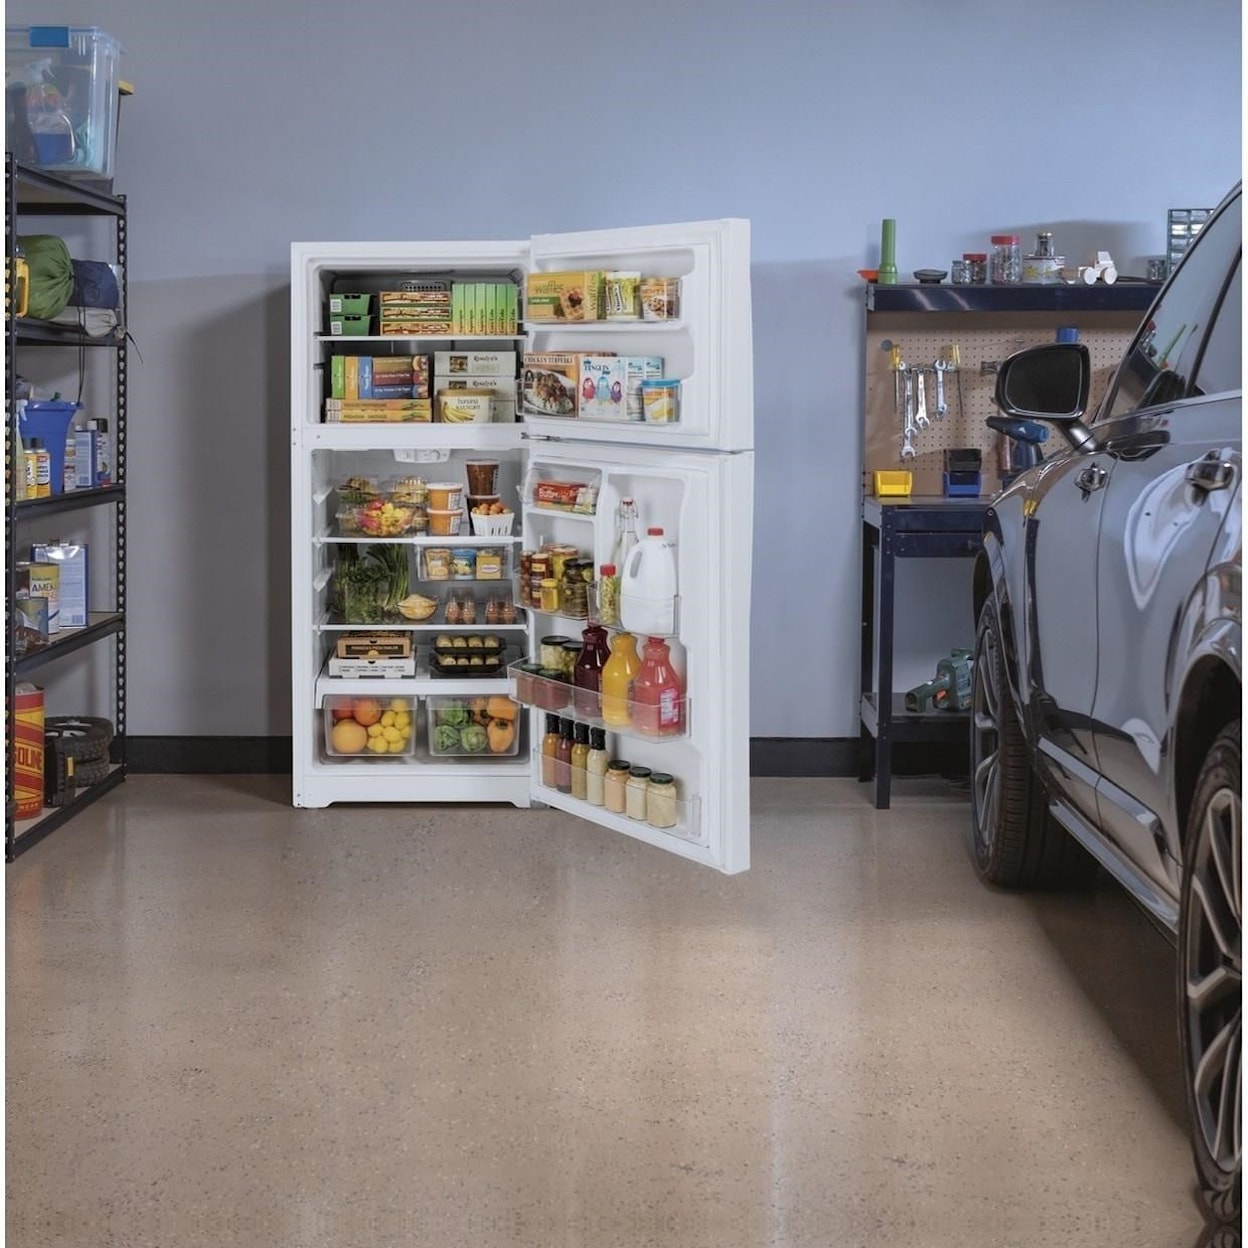 GE Appliances GE Top-Freezer Refrigerators GE® 19.2 Cu. Ft. Top-Freezer Refrigerator